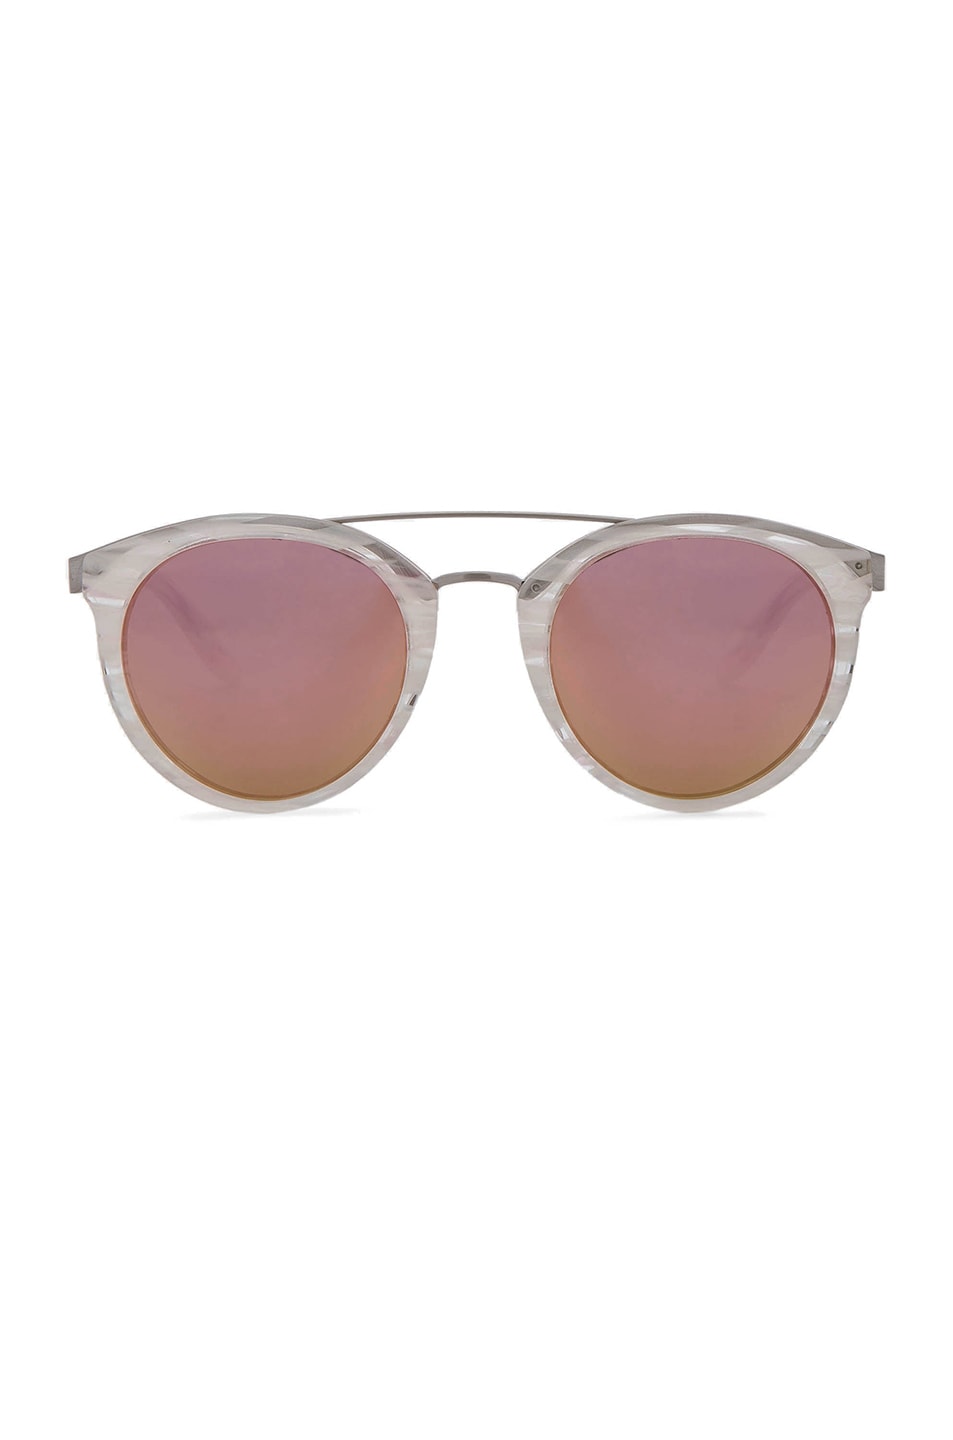 Image 1 of Barton Perreira for FWRD Dalziel Sunglasses in Ivory Pearl & Lilac